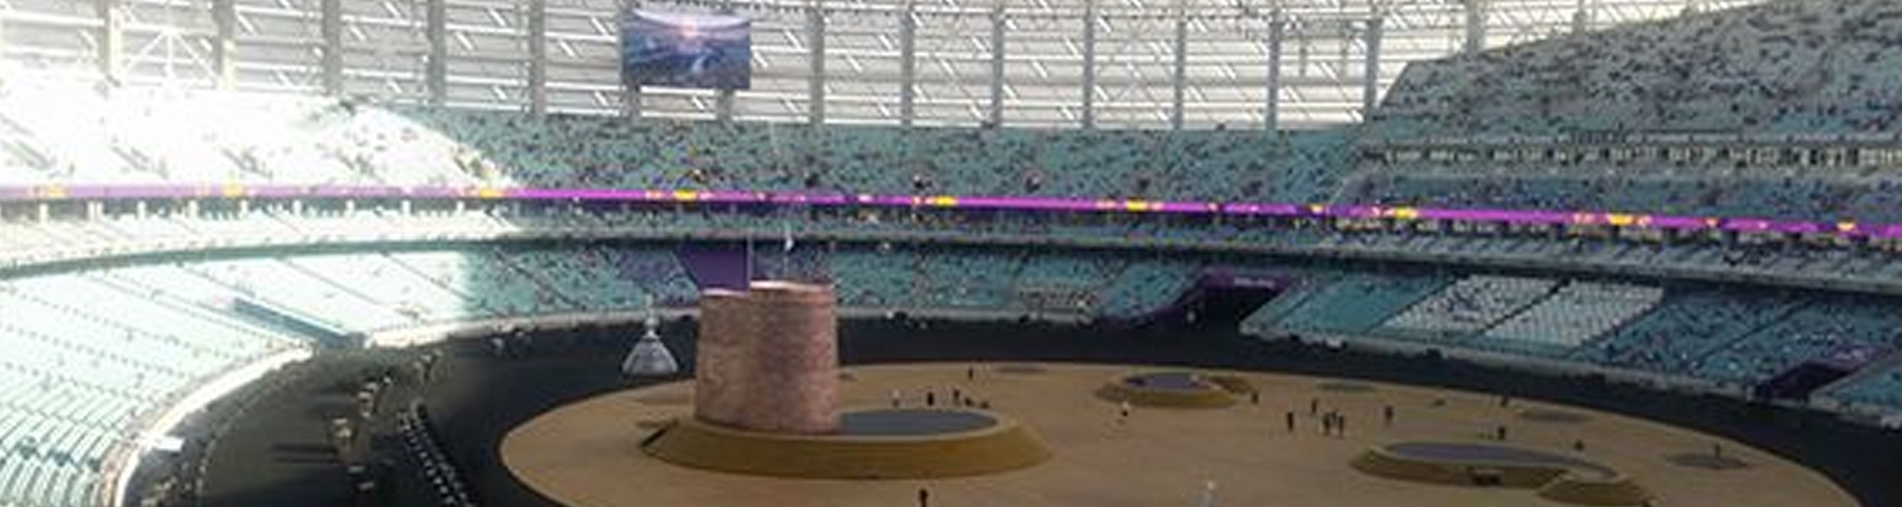 Unusual Rigging ensures seamless opening and closing ceremonies at the European Games in Baku